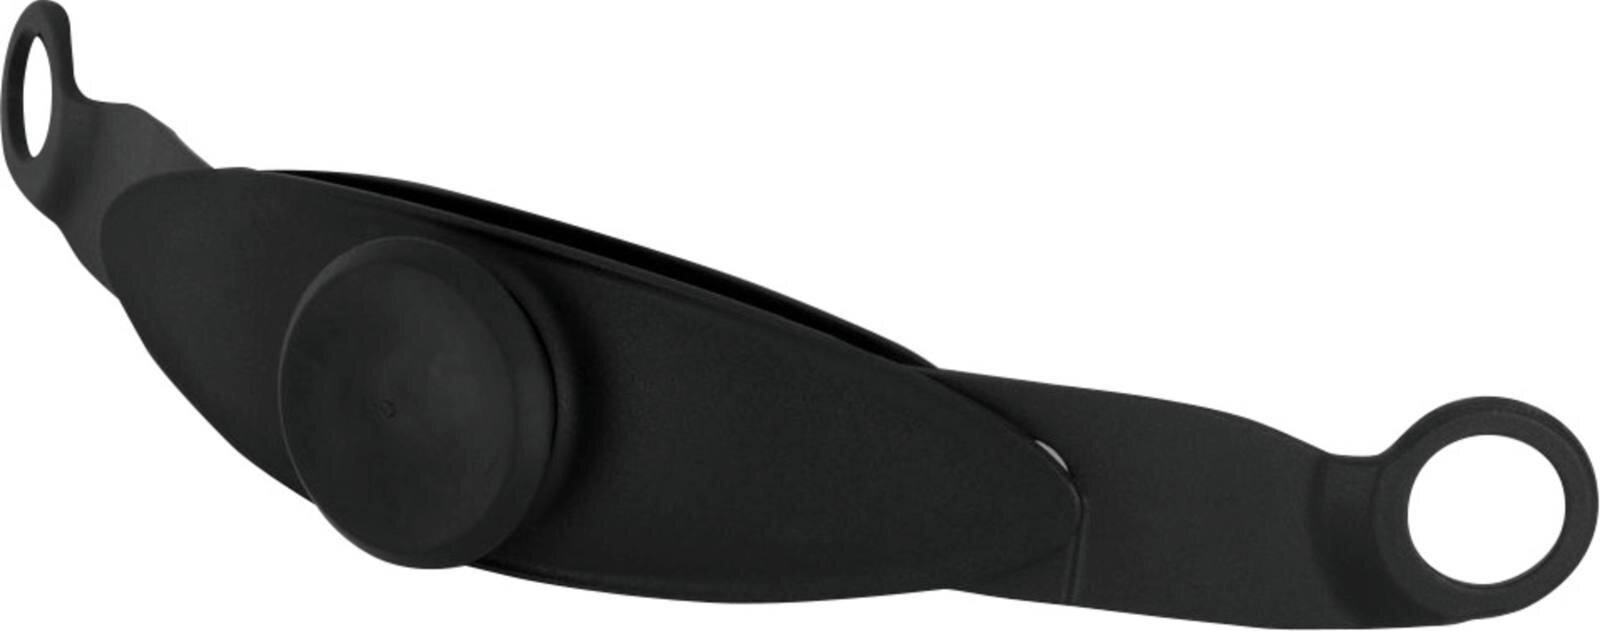 3M Speedglas Adjustment strap l Ratchet system for headgear #536200